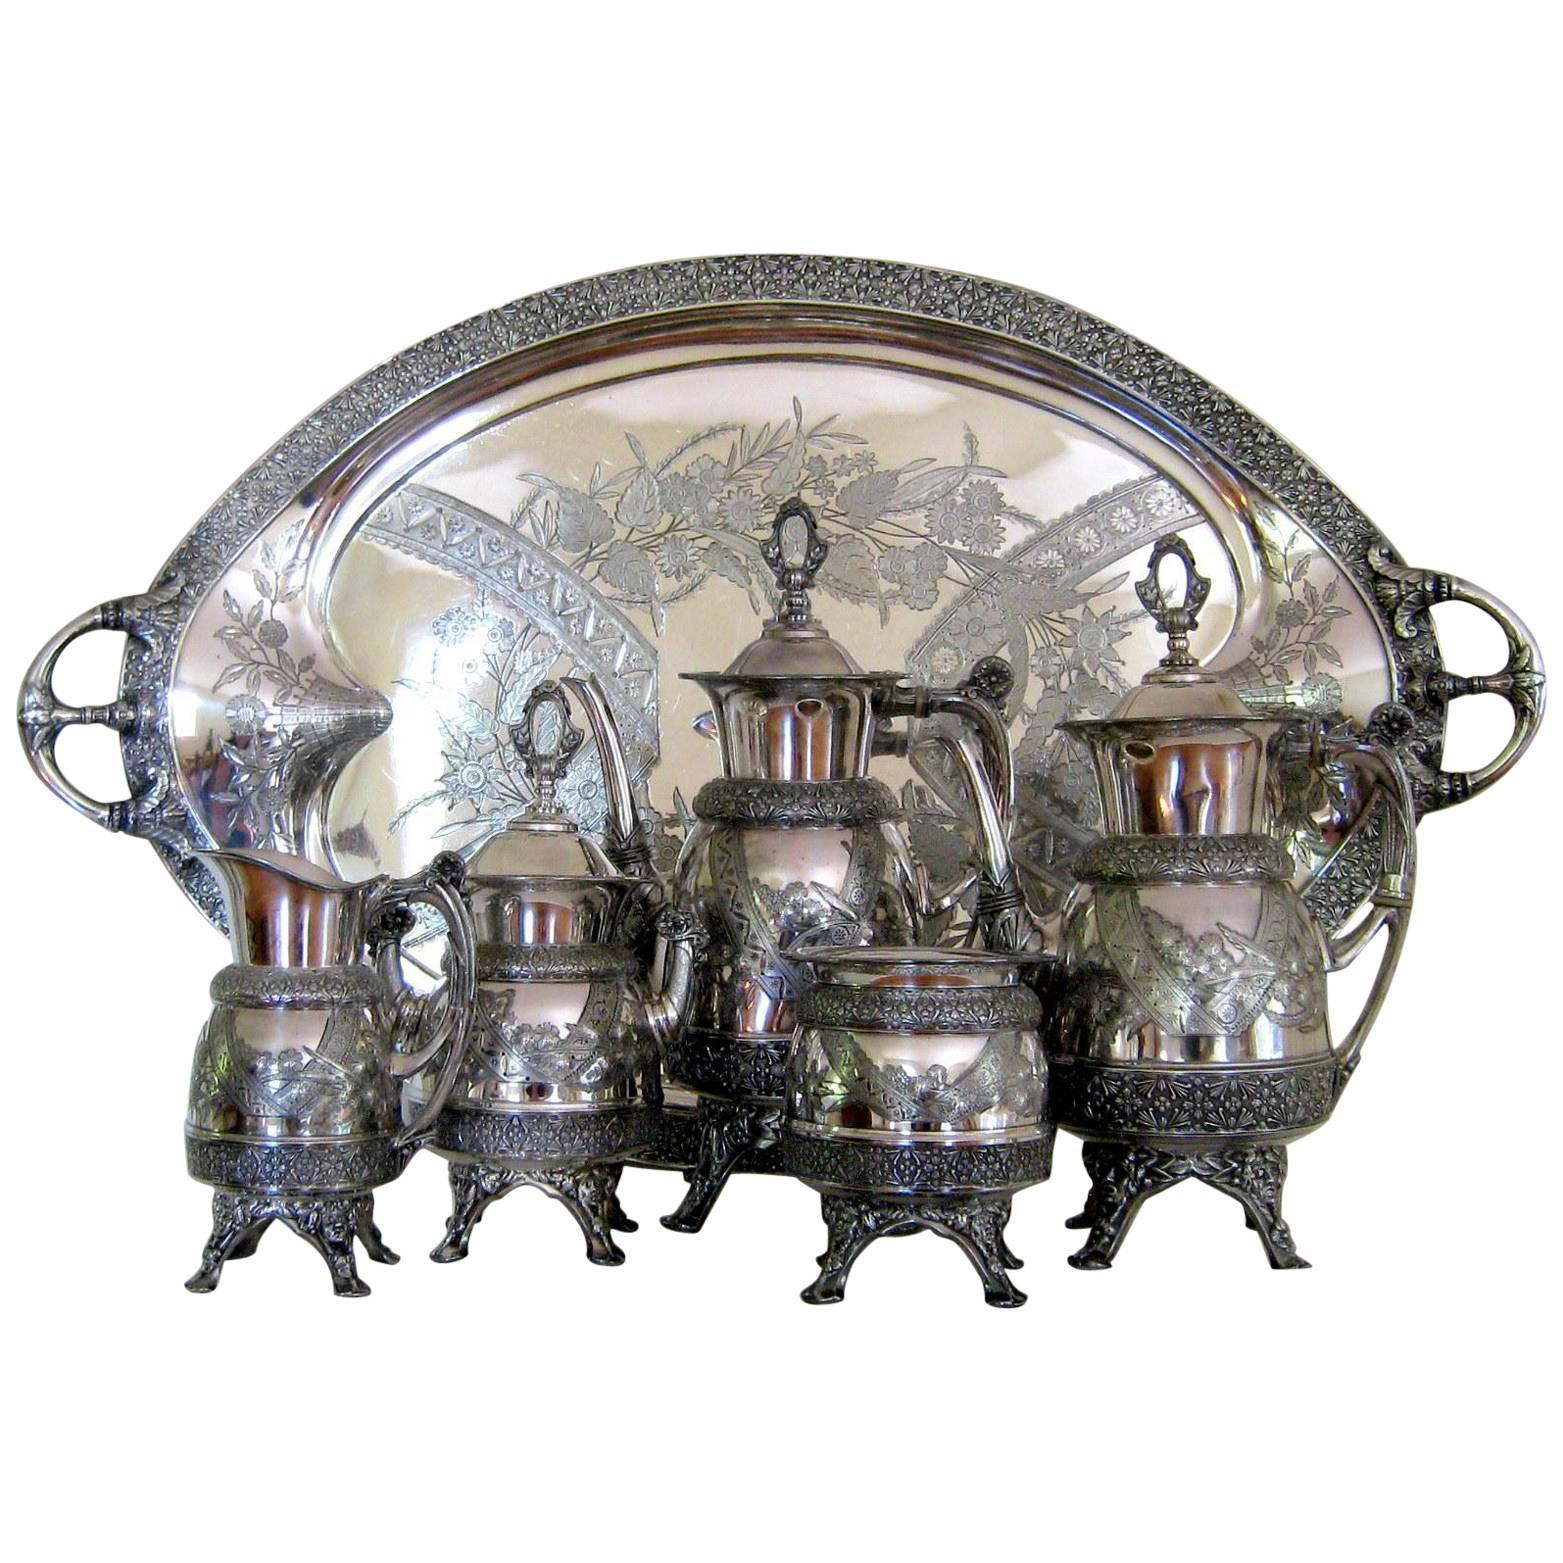 Victorian Aesthetic Silver Plate Tea Set & Tray, circa 1878, Antique Meridan B. For Sale